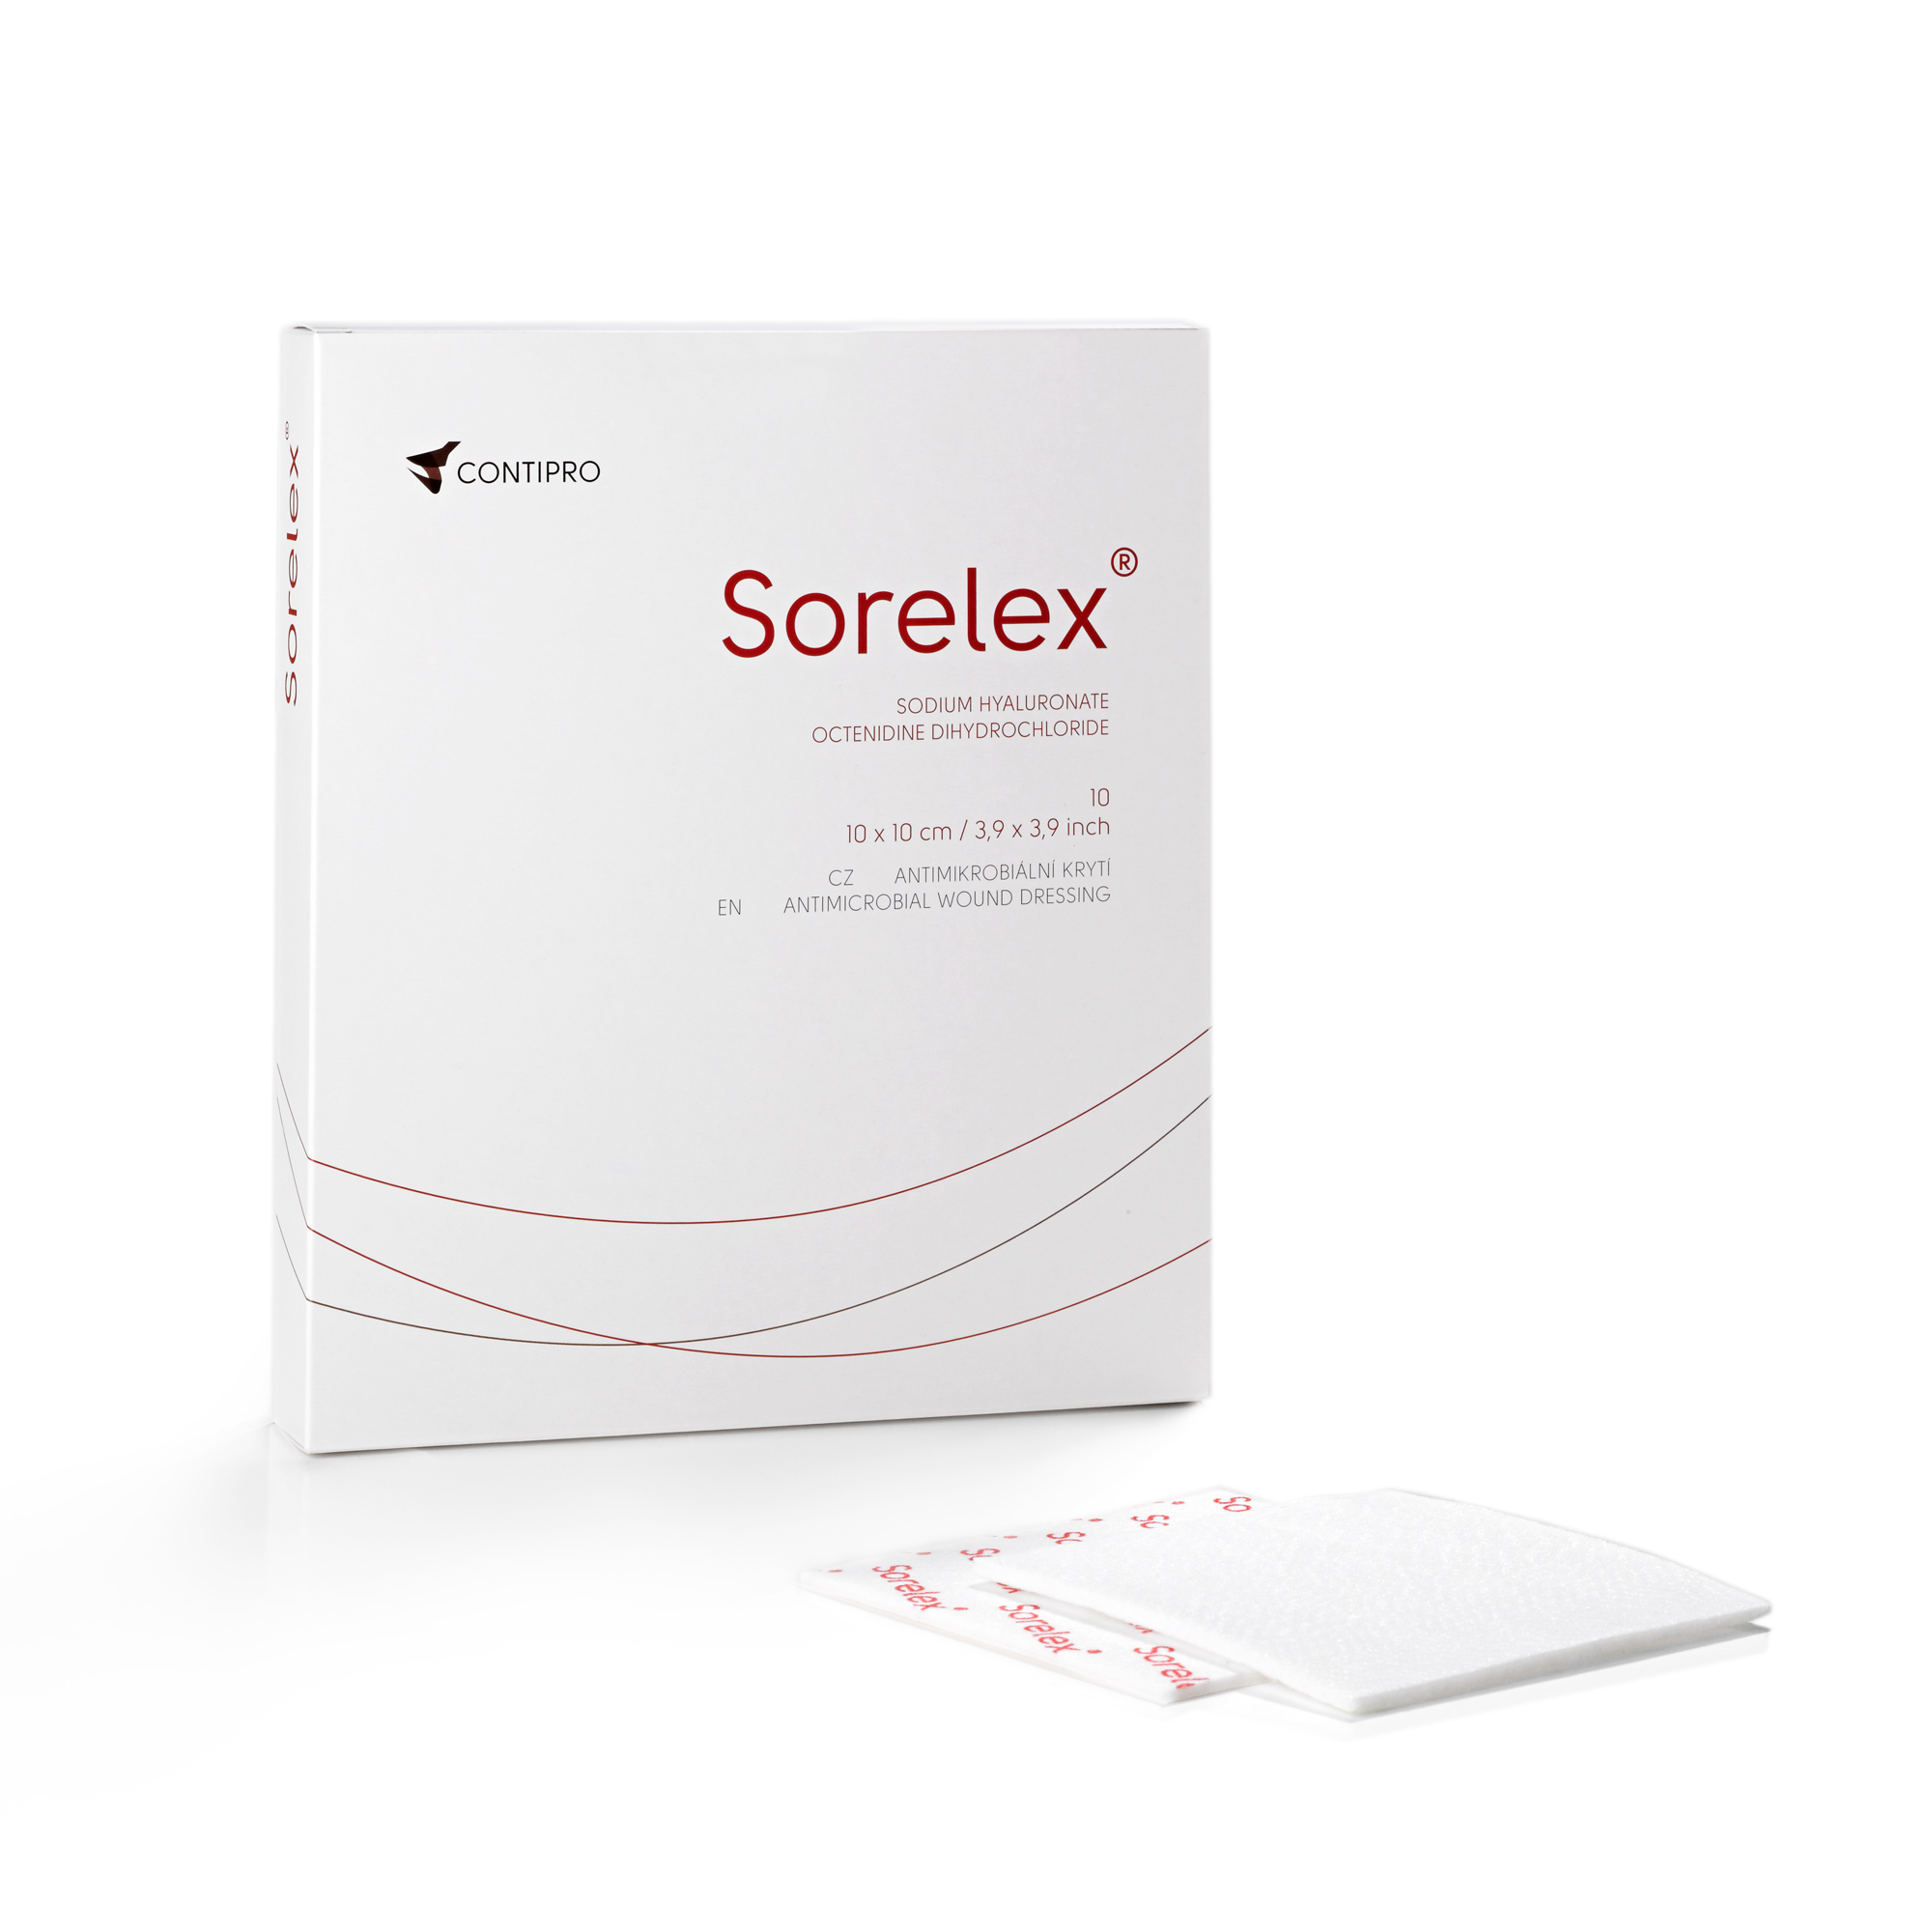 Sorelex: Antimicrobial wound dressing